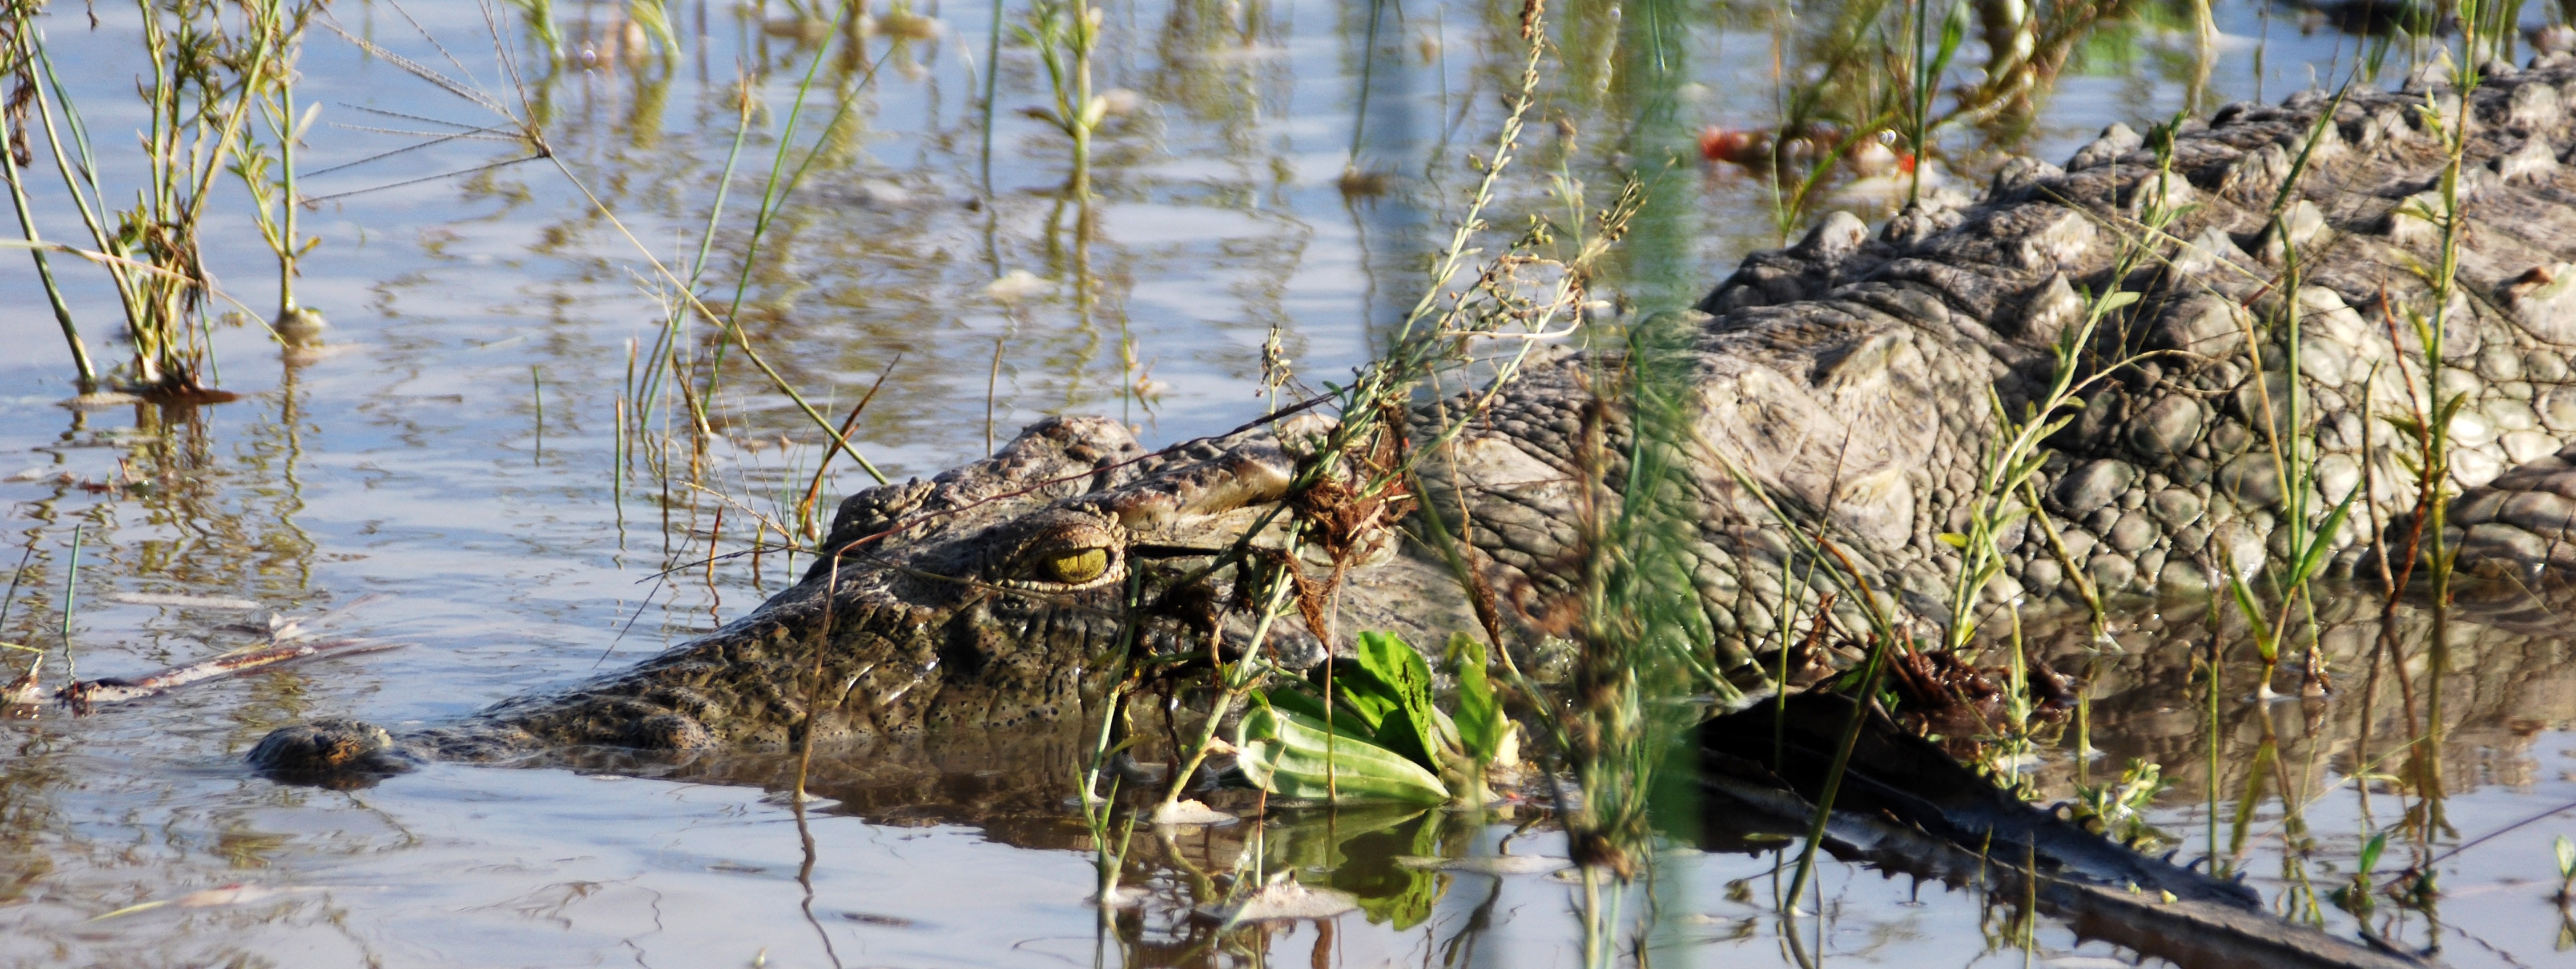 Nile crocodile in Rufiji River, Nyerere